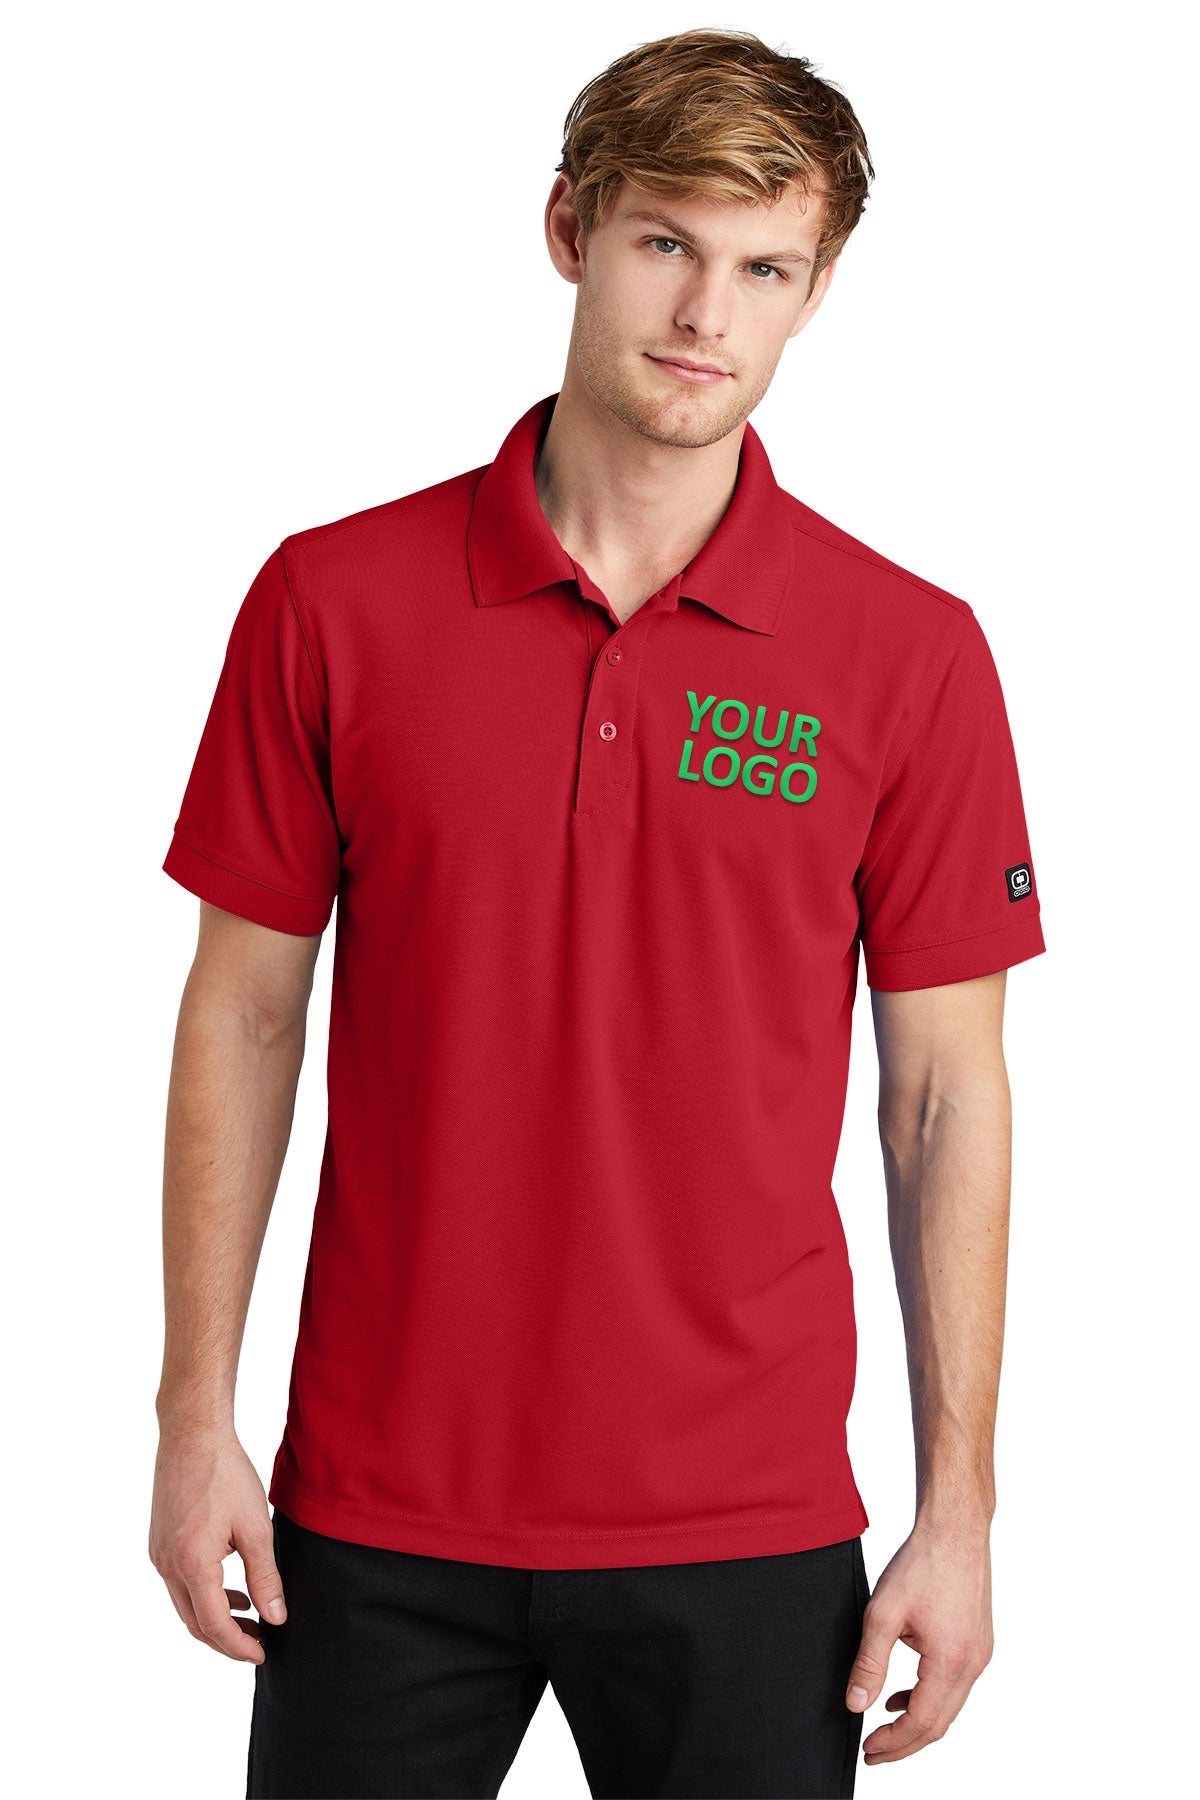 OGIO Signal Red OG101 polo shirts with custom logo